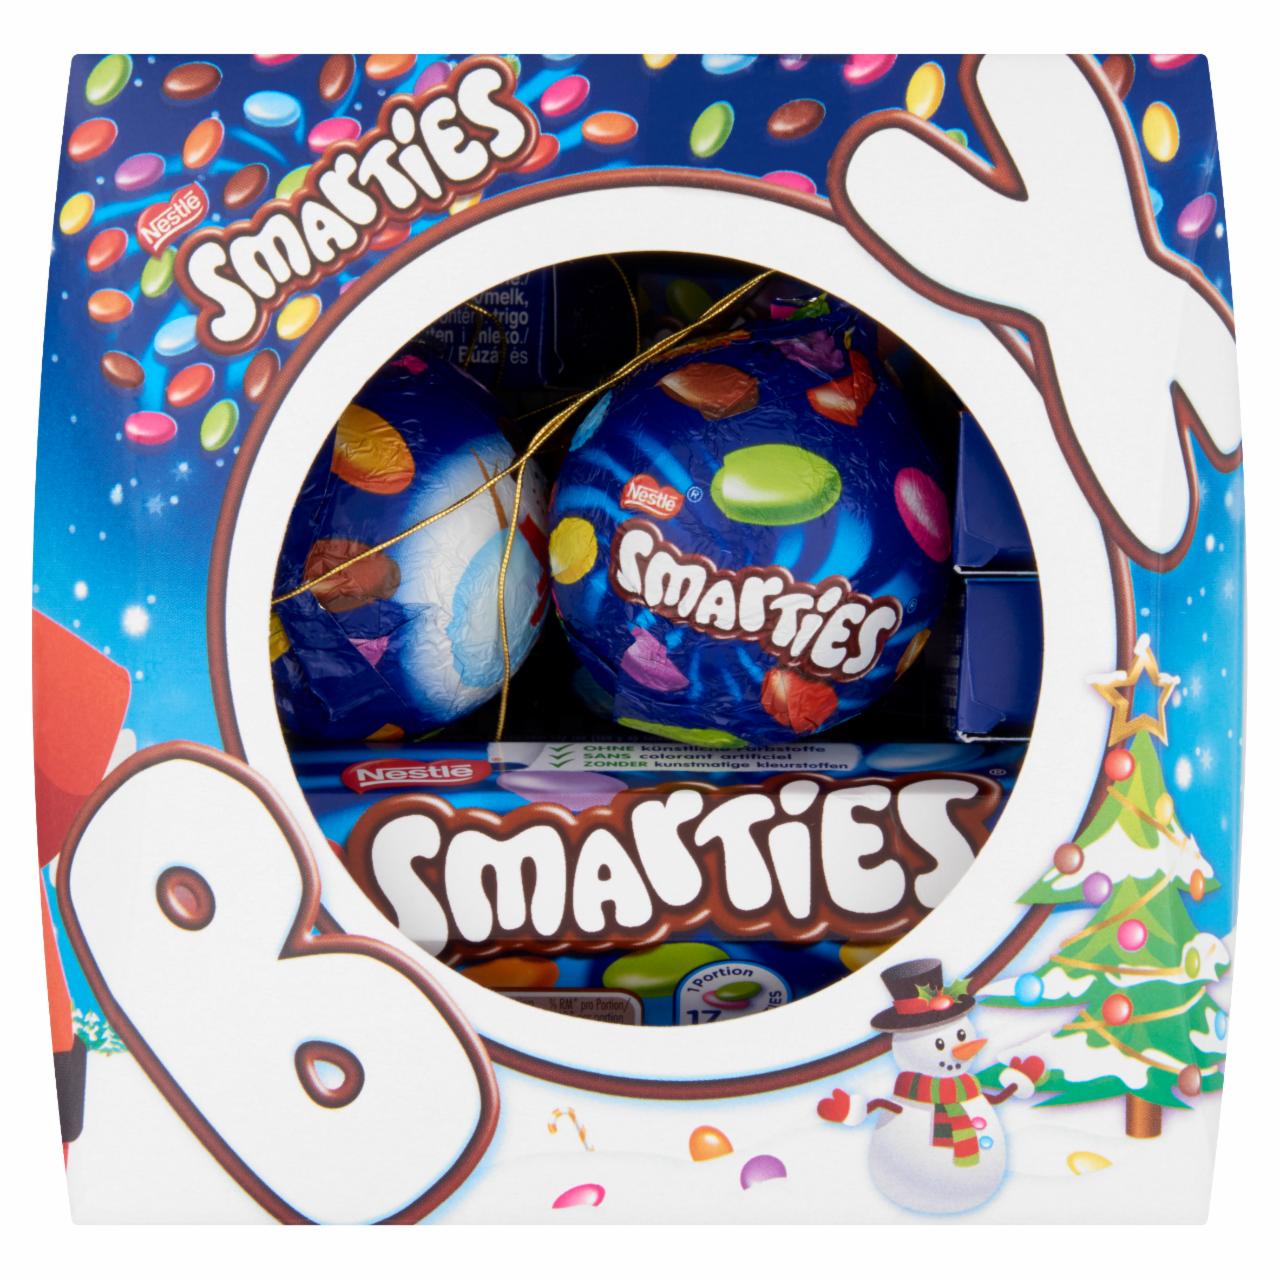 Képek - Smarties Box tejcsokoládé gömb csokoládés cukordrazséval & tejcsokoládé drazsé cukorbevonattal 352 g